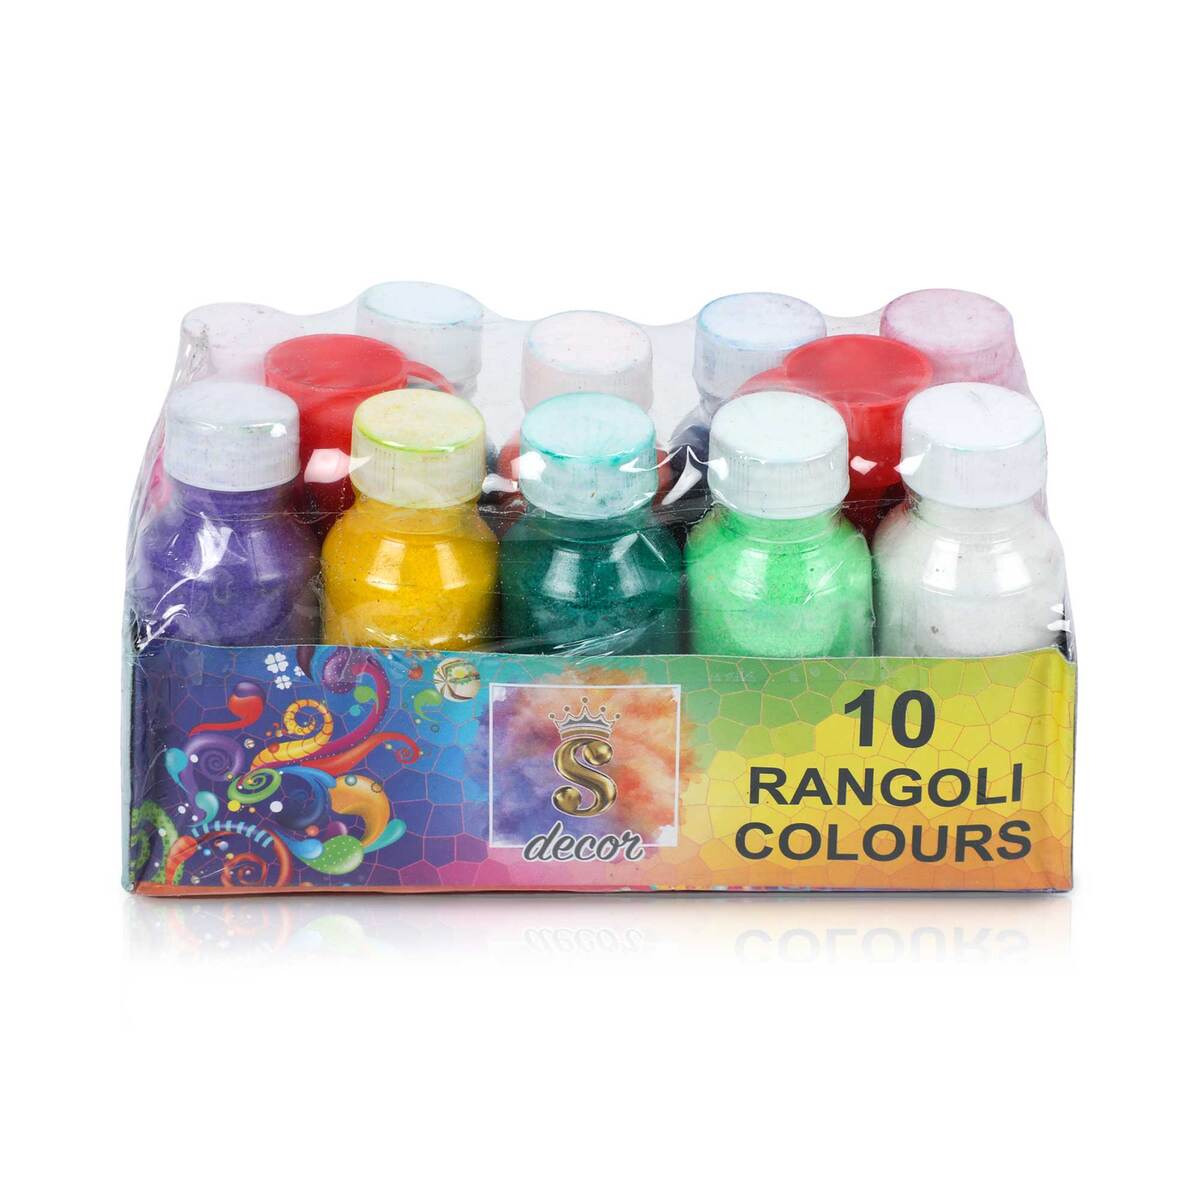 SATVIK 6 Shades of Under Water Rangoli Colors Easy To Store Water Rangoli  Glitter Colours Kit (No GULAL) Festival/Festive Multi Colors Powder